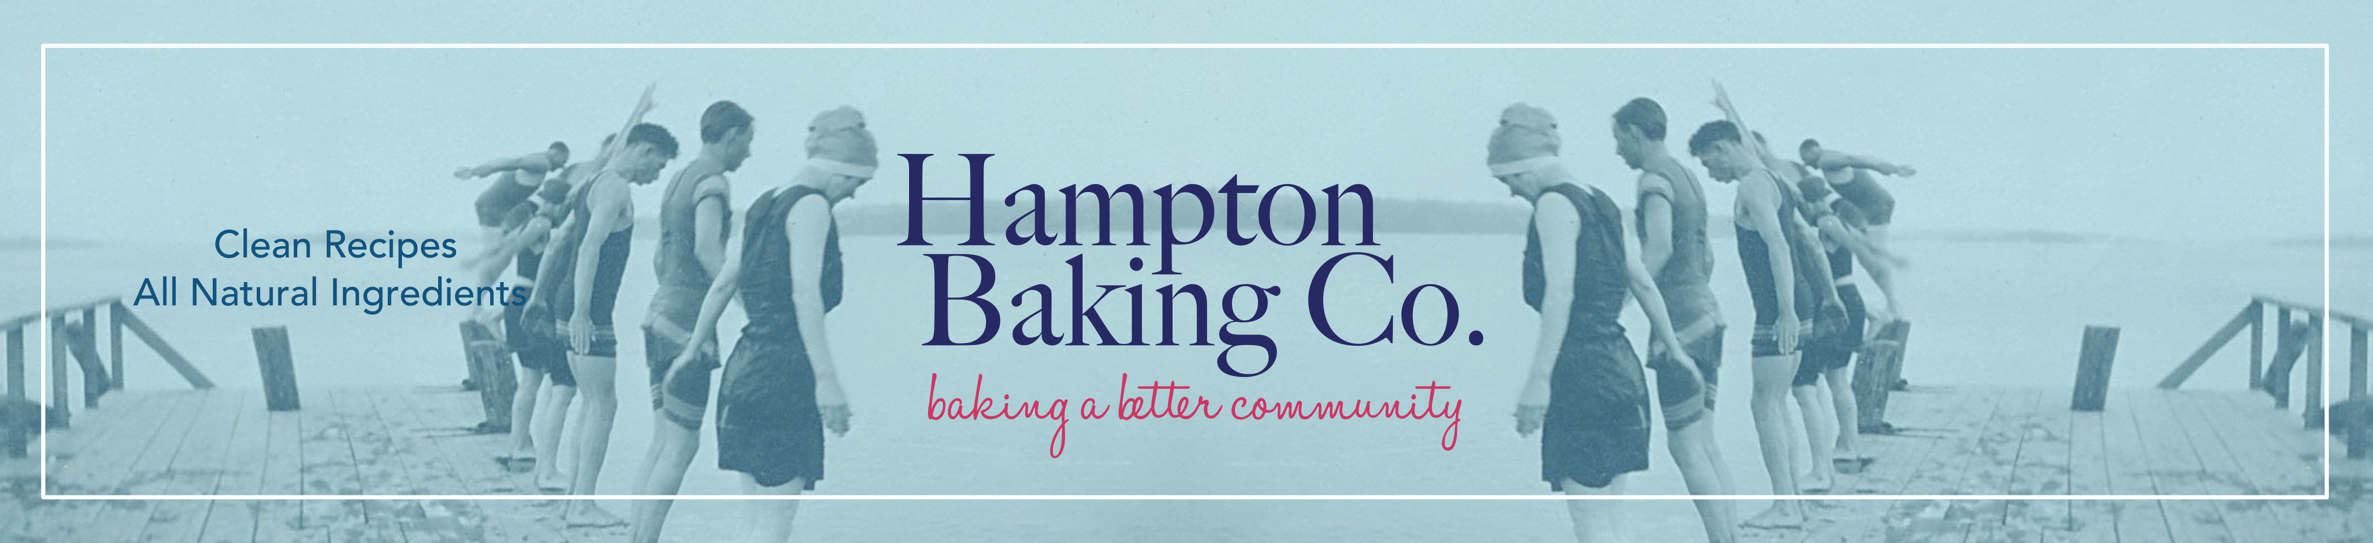 Hampton Baking Co.